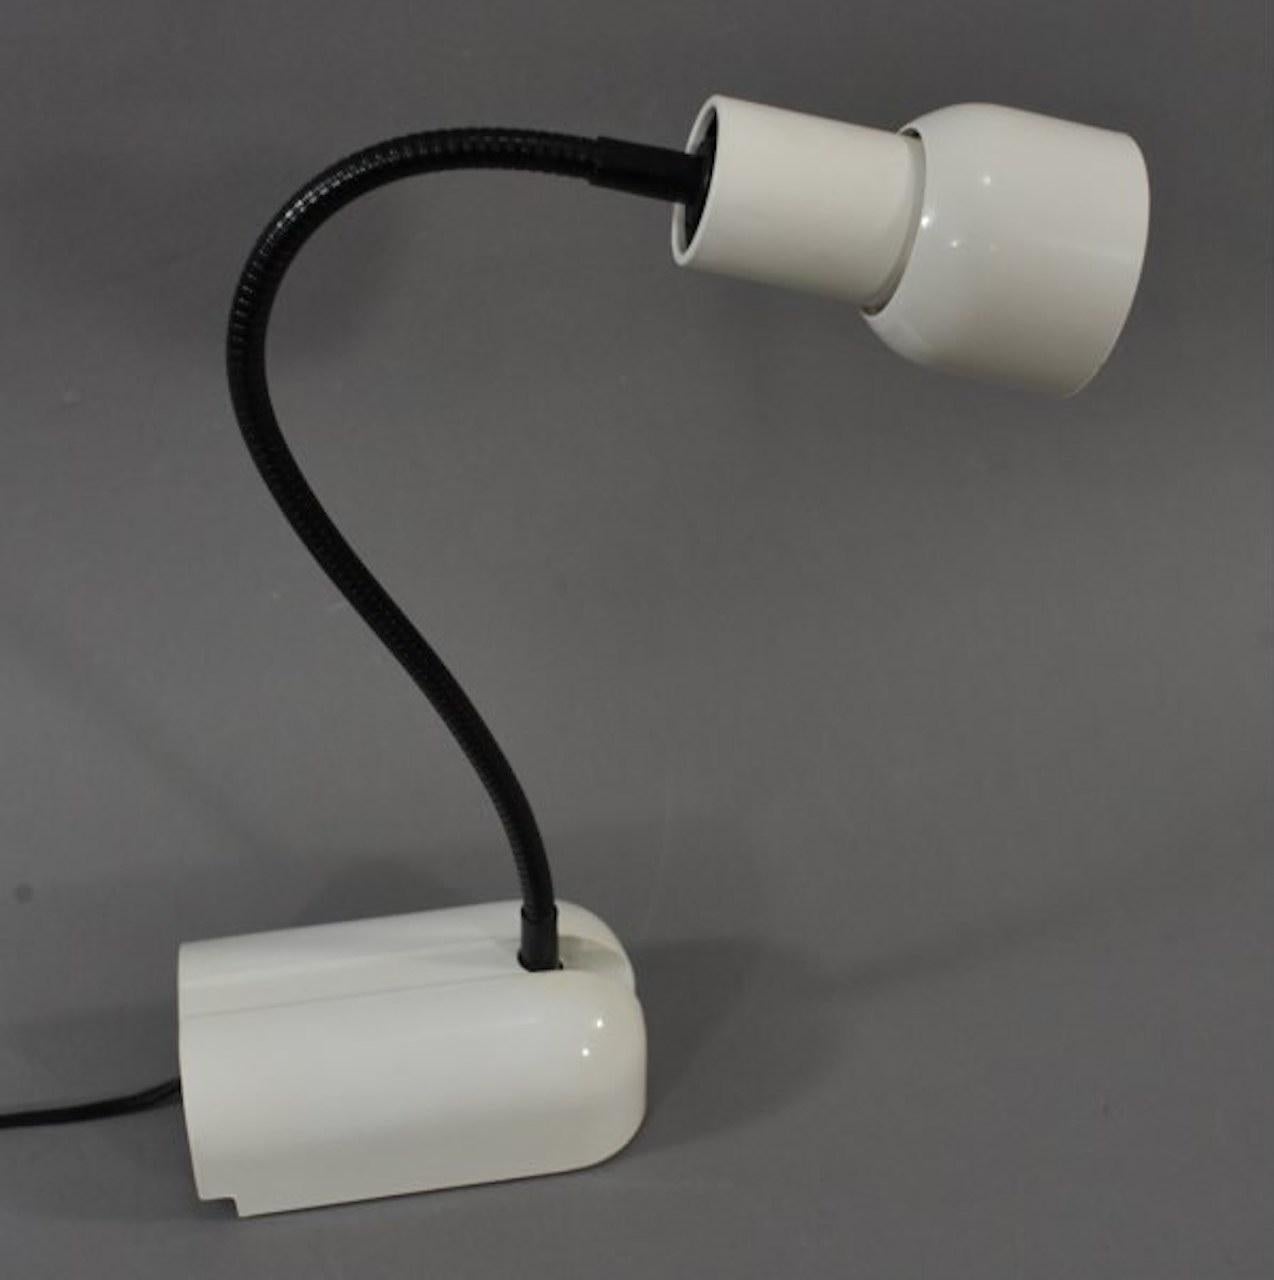 Tholos lamp - Ernesto Gismondi
Artemide Edition

Measures: L10 x H54 x P15

Steel and white lacquered plastic

Circa 1970.